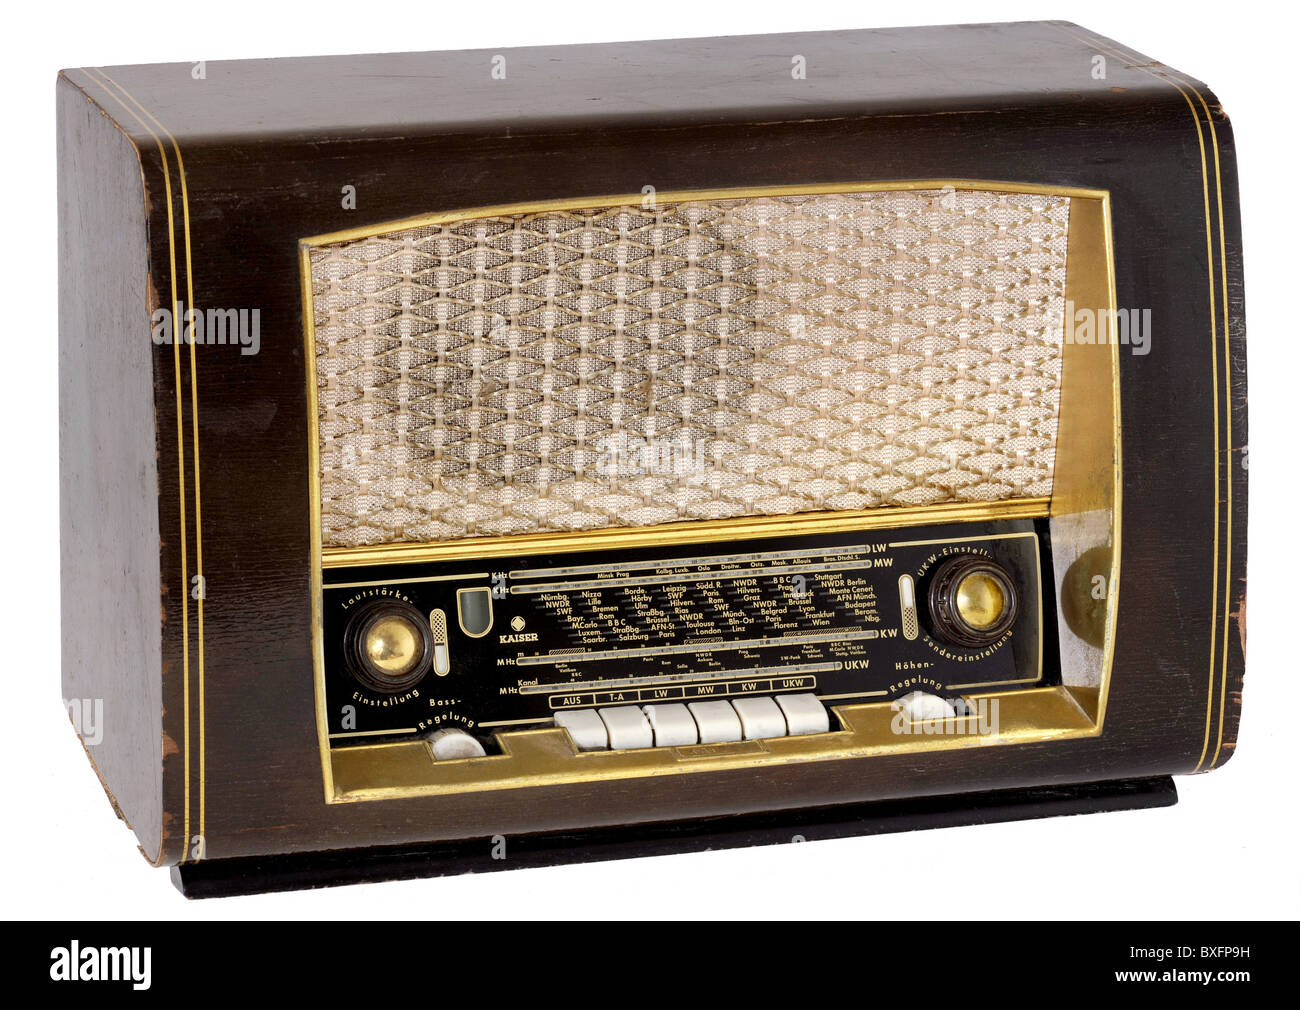 Radio, Kaiser, Modell W 1140, Alemania, 1954, 1950, 50s, siglo 20,  histórico, histórico, radio, radio, aparatos de radio, radios, chasis de  maderas exóticas, hecho en Alemania, electrónica de consumo, electrónica de  entretenimiento,